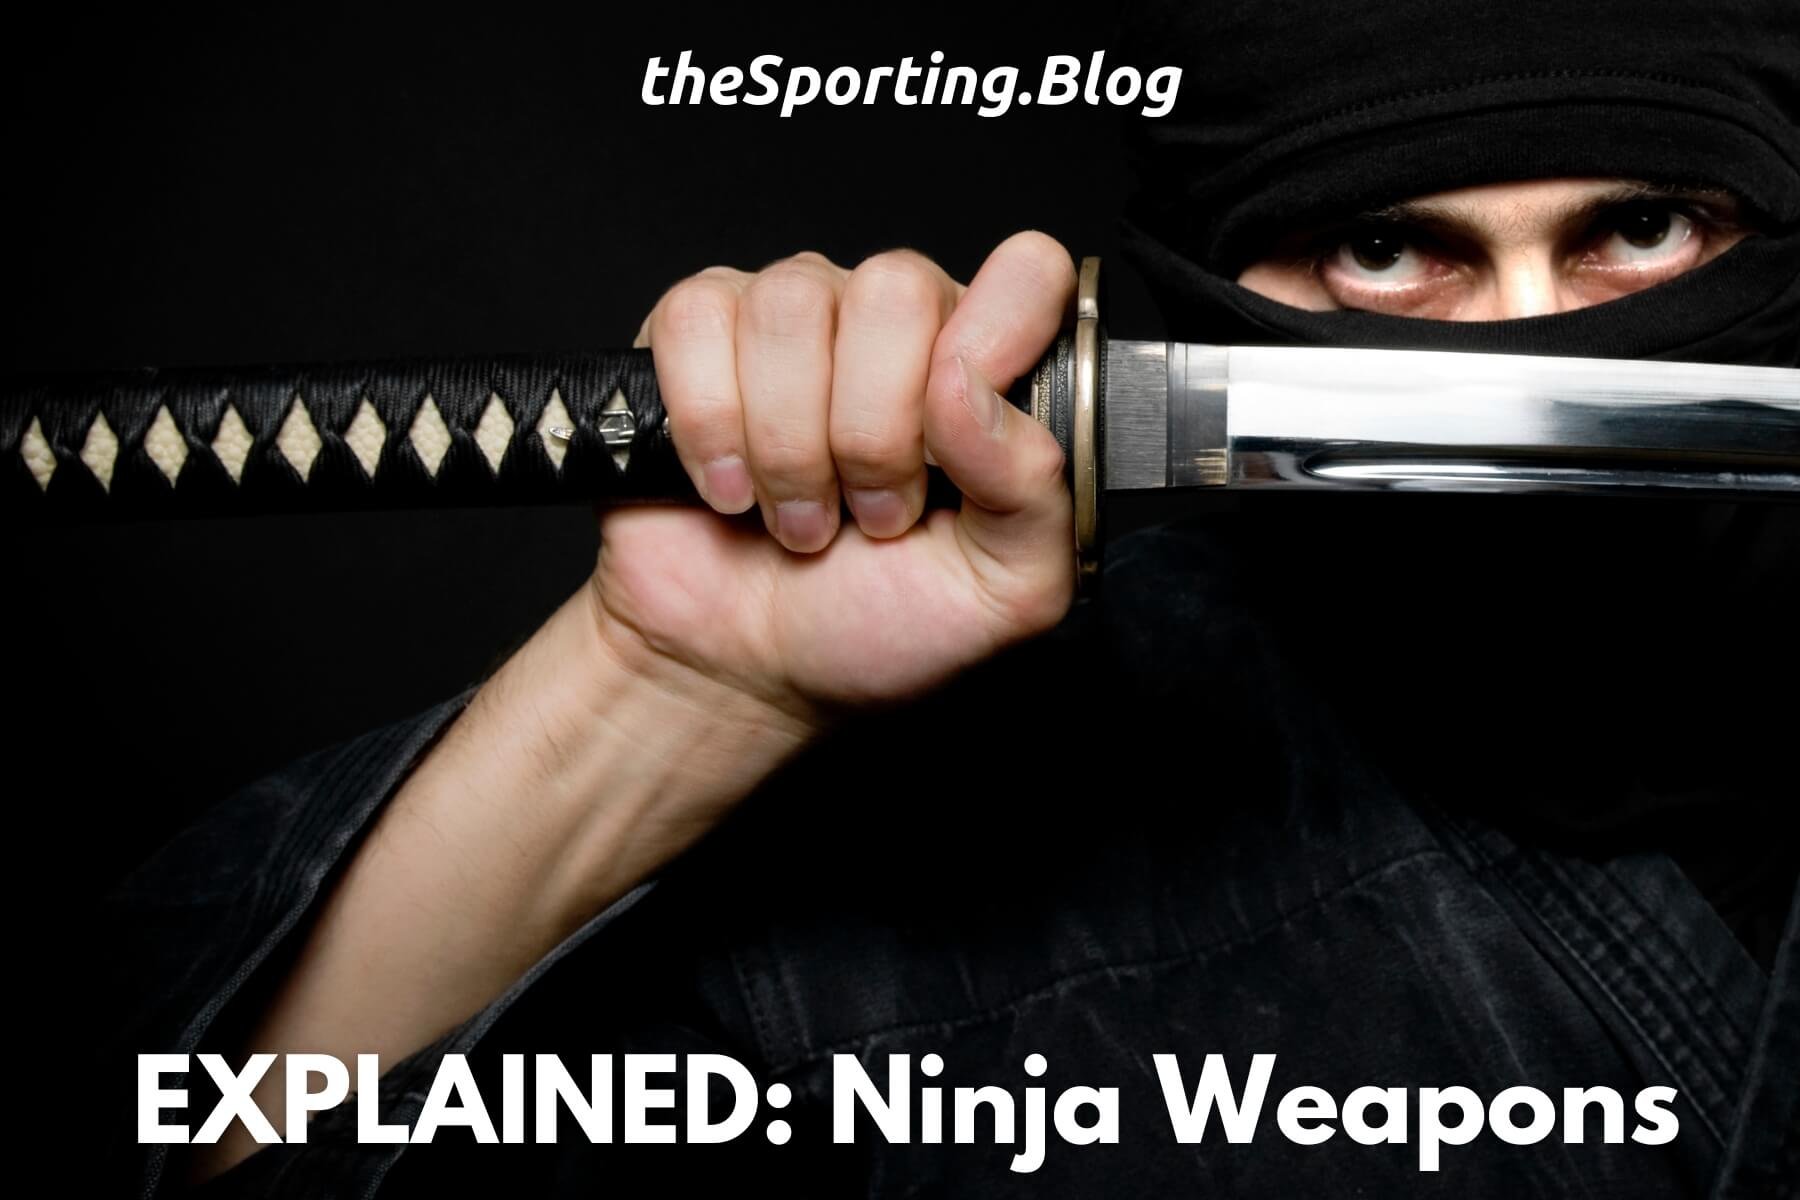 https://images.squarespace-cdn.com/content/v1/58ee0b551e5b6c8ff18b94ad/ef6617d1-a766-412b-b6ba-00240fe15e0b/ninja+weapons+explained+%281%29.jpg